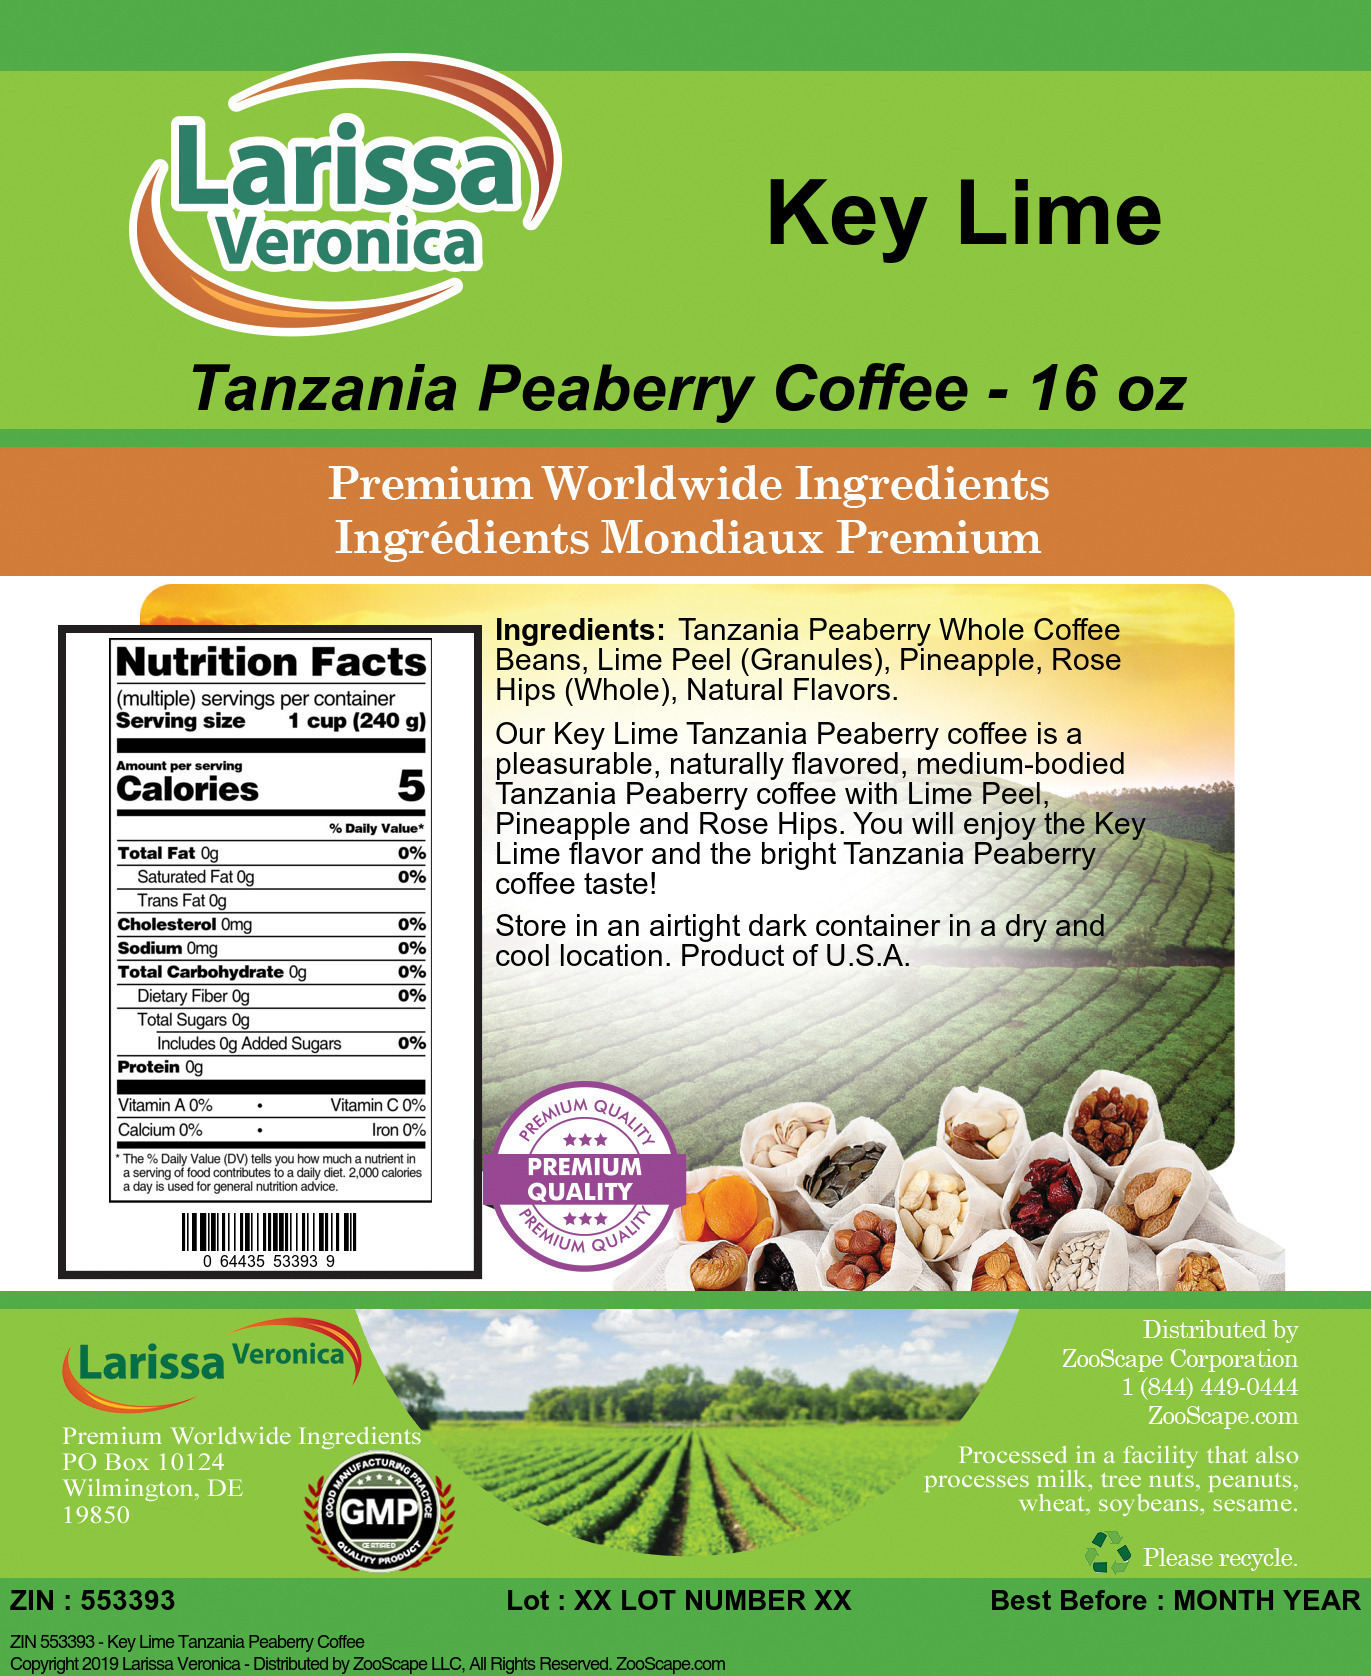 Key Lime Tanzania Peaberry Coffee - Label